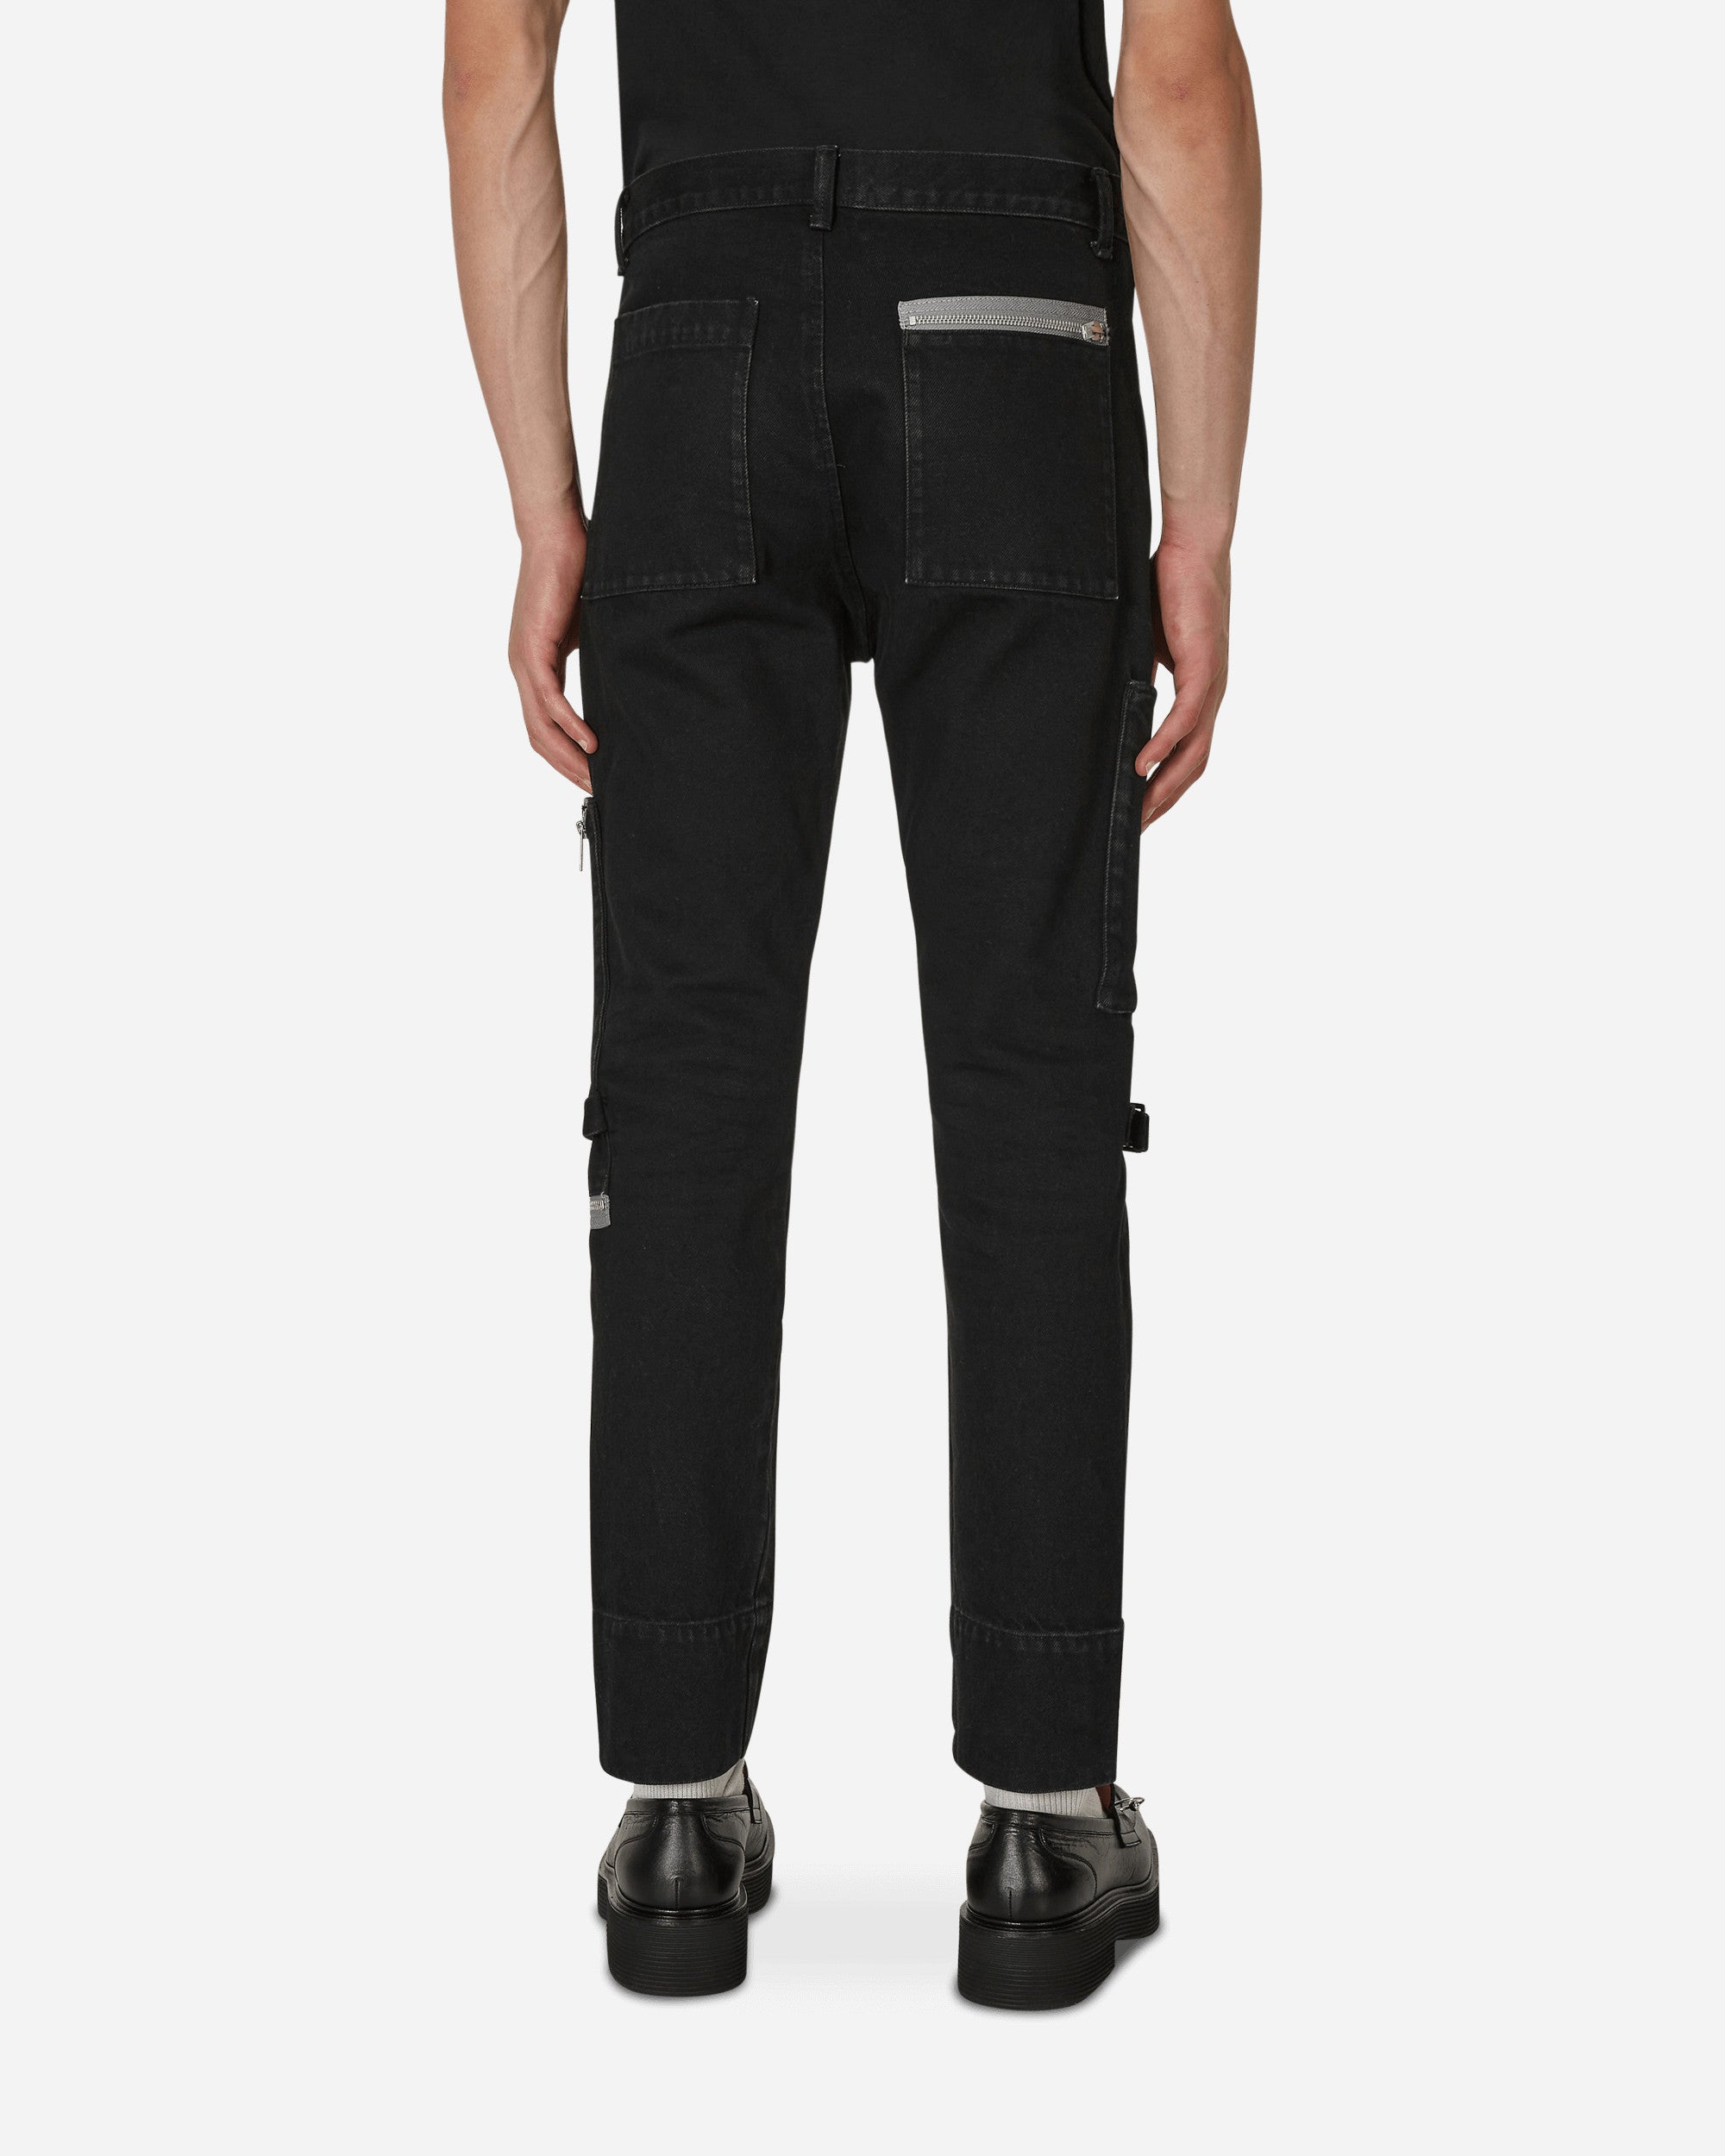 Undercover Zippered Pants Black Pants Trousers UC2B4505-2  001